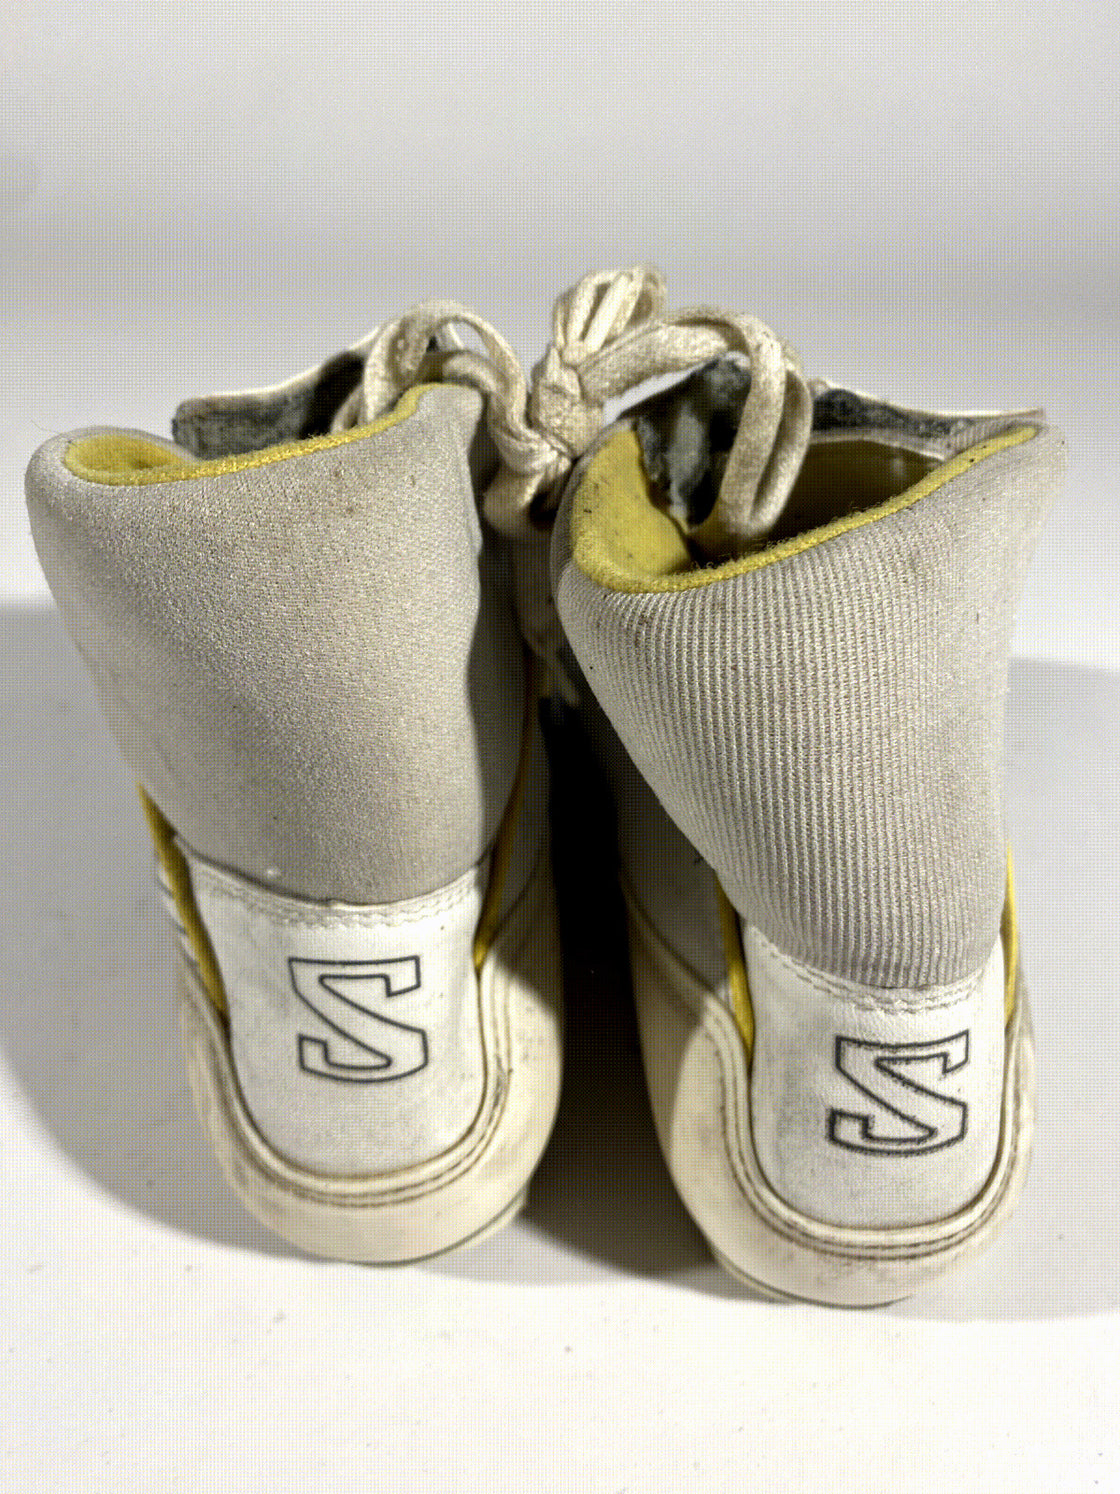 Salomon SR601 Nordic Cross Country Ski Boots Size EU41 US8 for SNS Old